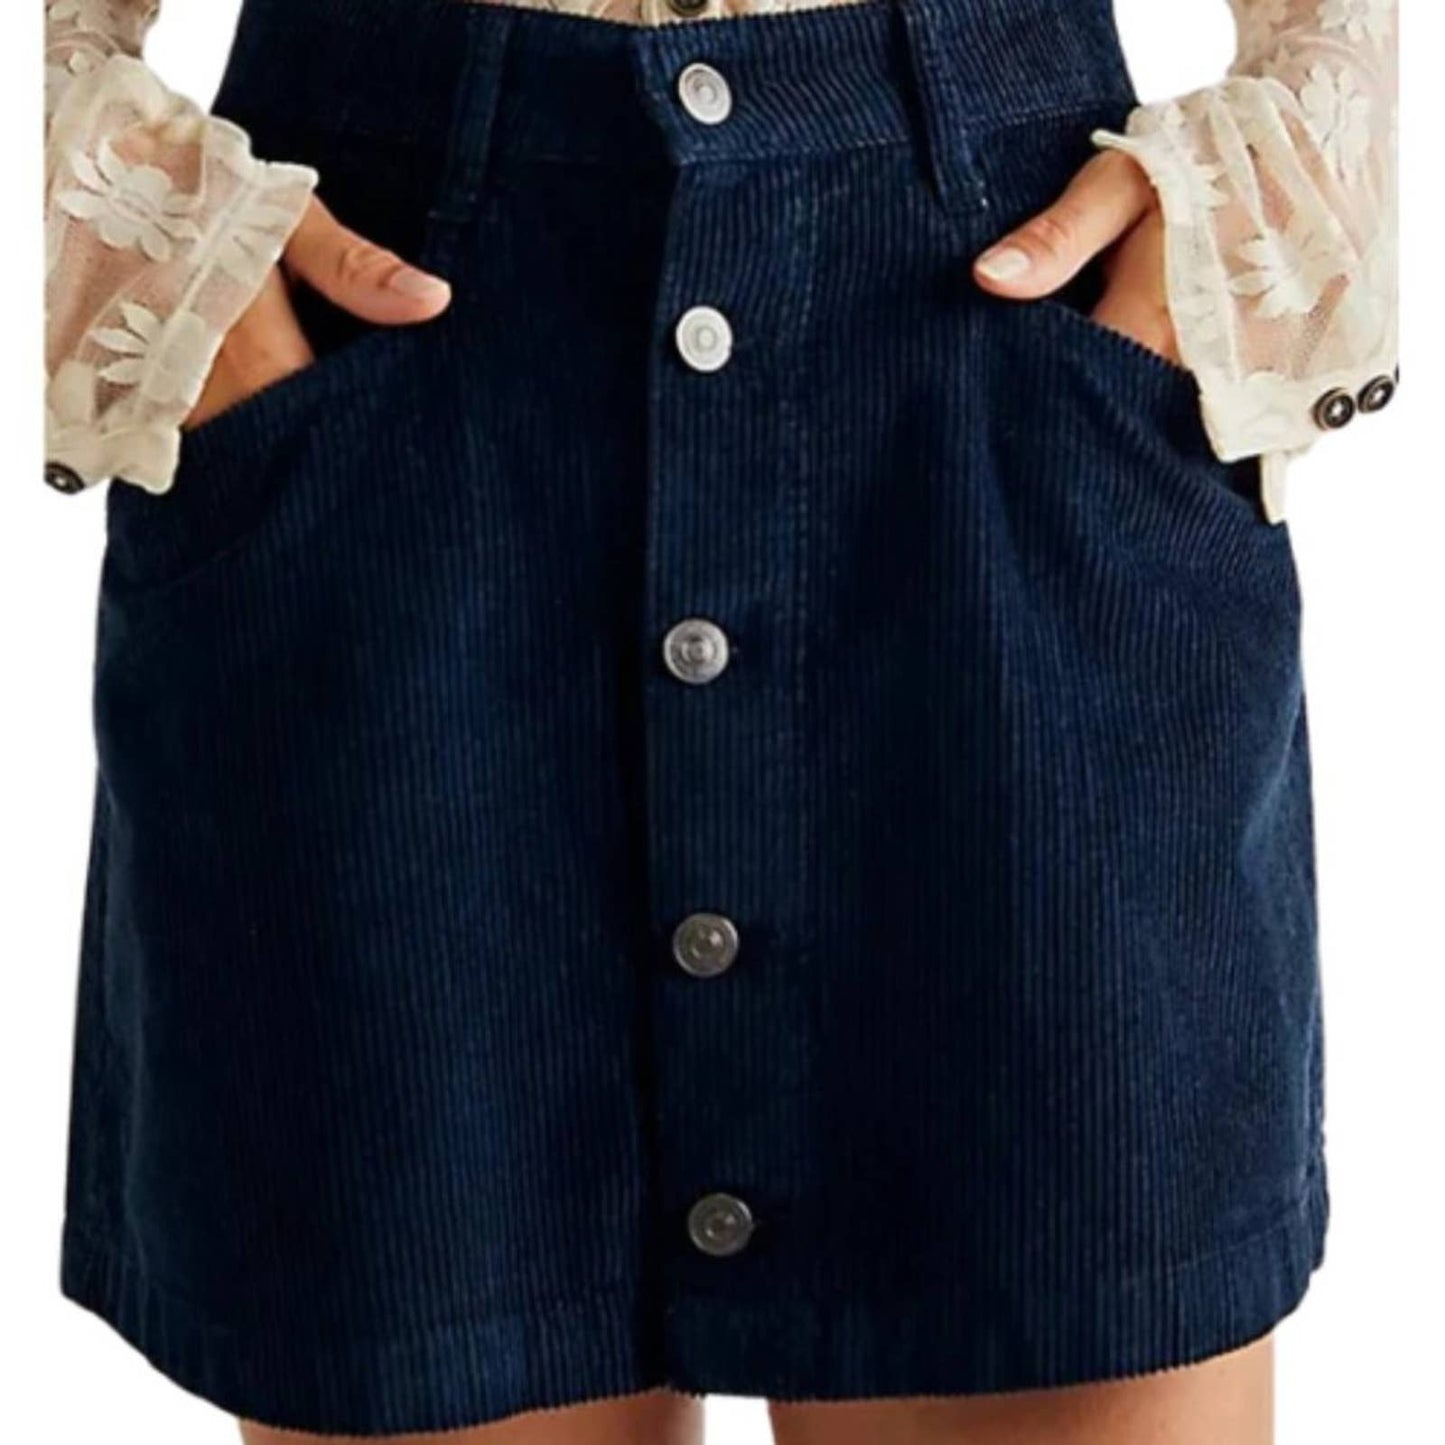 Free People Ray Cord Mini Skirt in Ebony Blue NWT Size 0